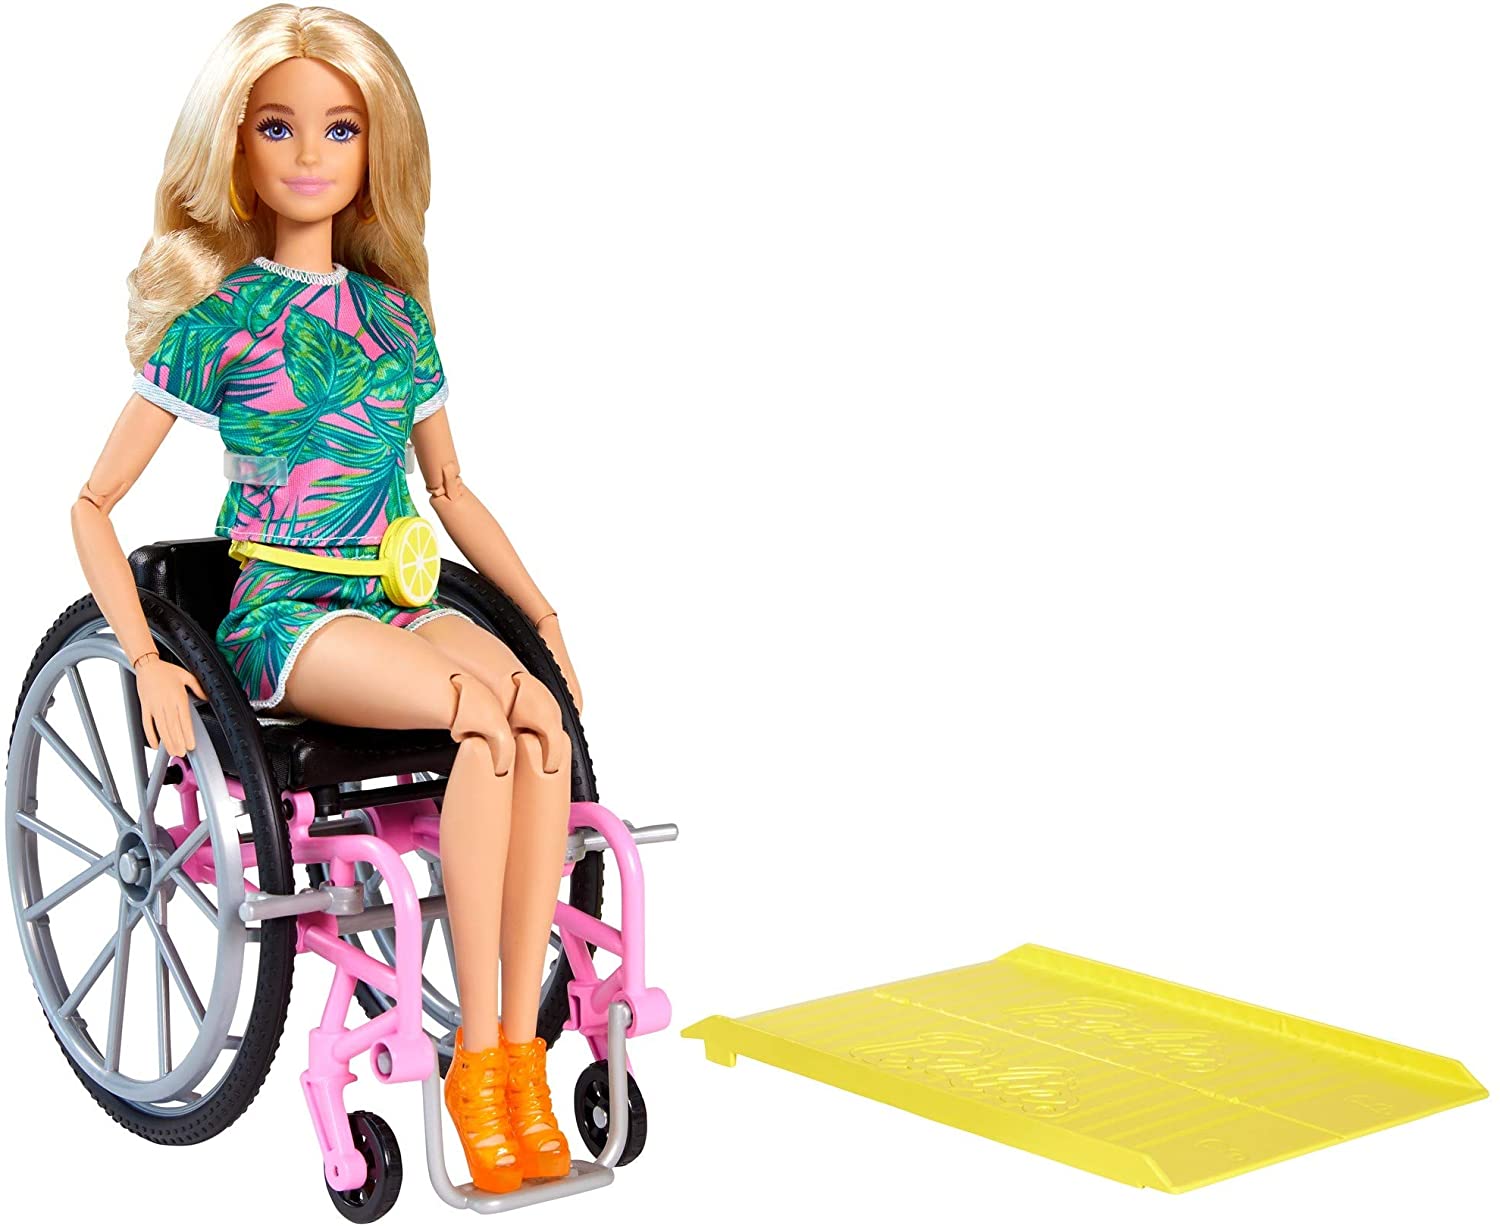 Barbie Fashionistas 2021 Wheelchair : Ken doll is dressed in a ...